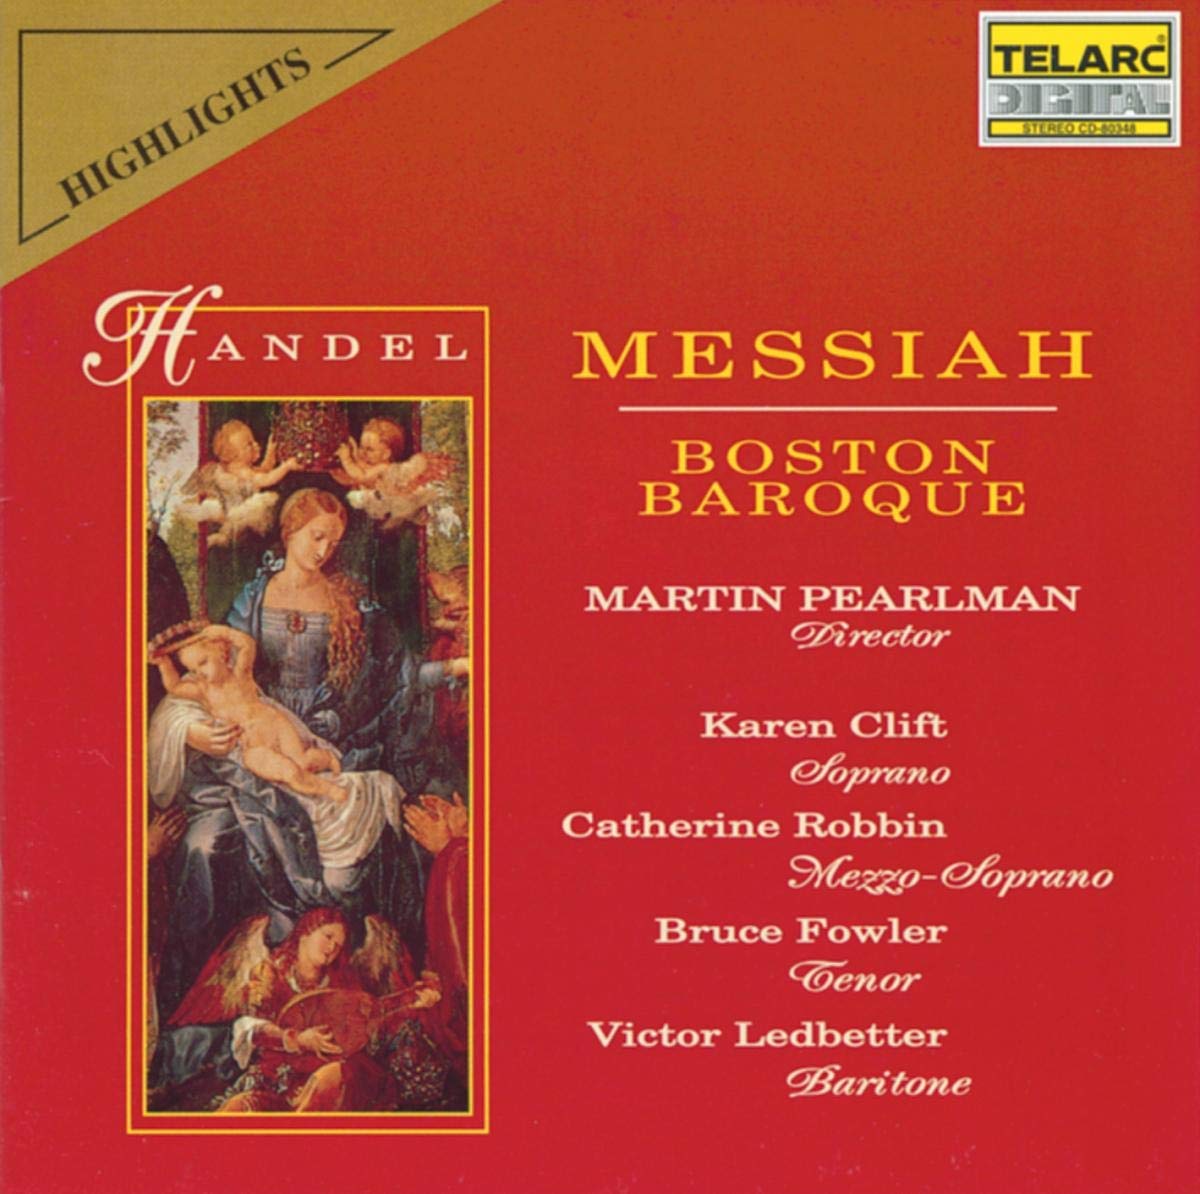 HANDEL: MESSIAH (HIGHLIGHTS) - Boston Baroque, Martin Pearlman